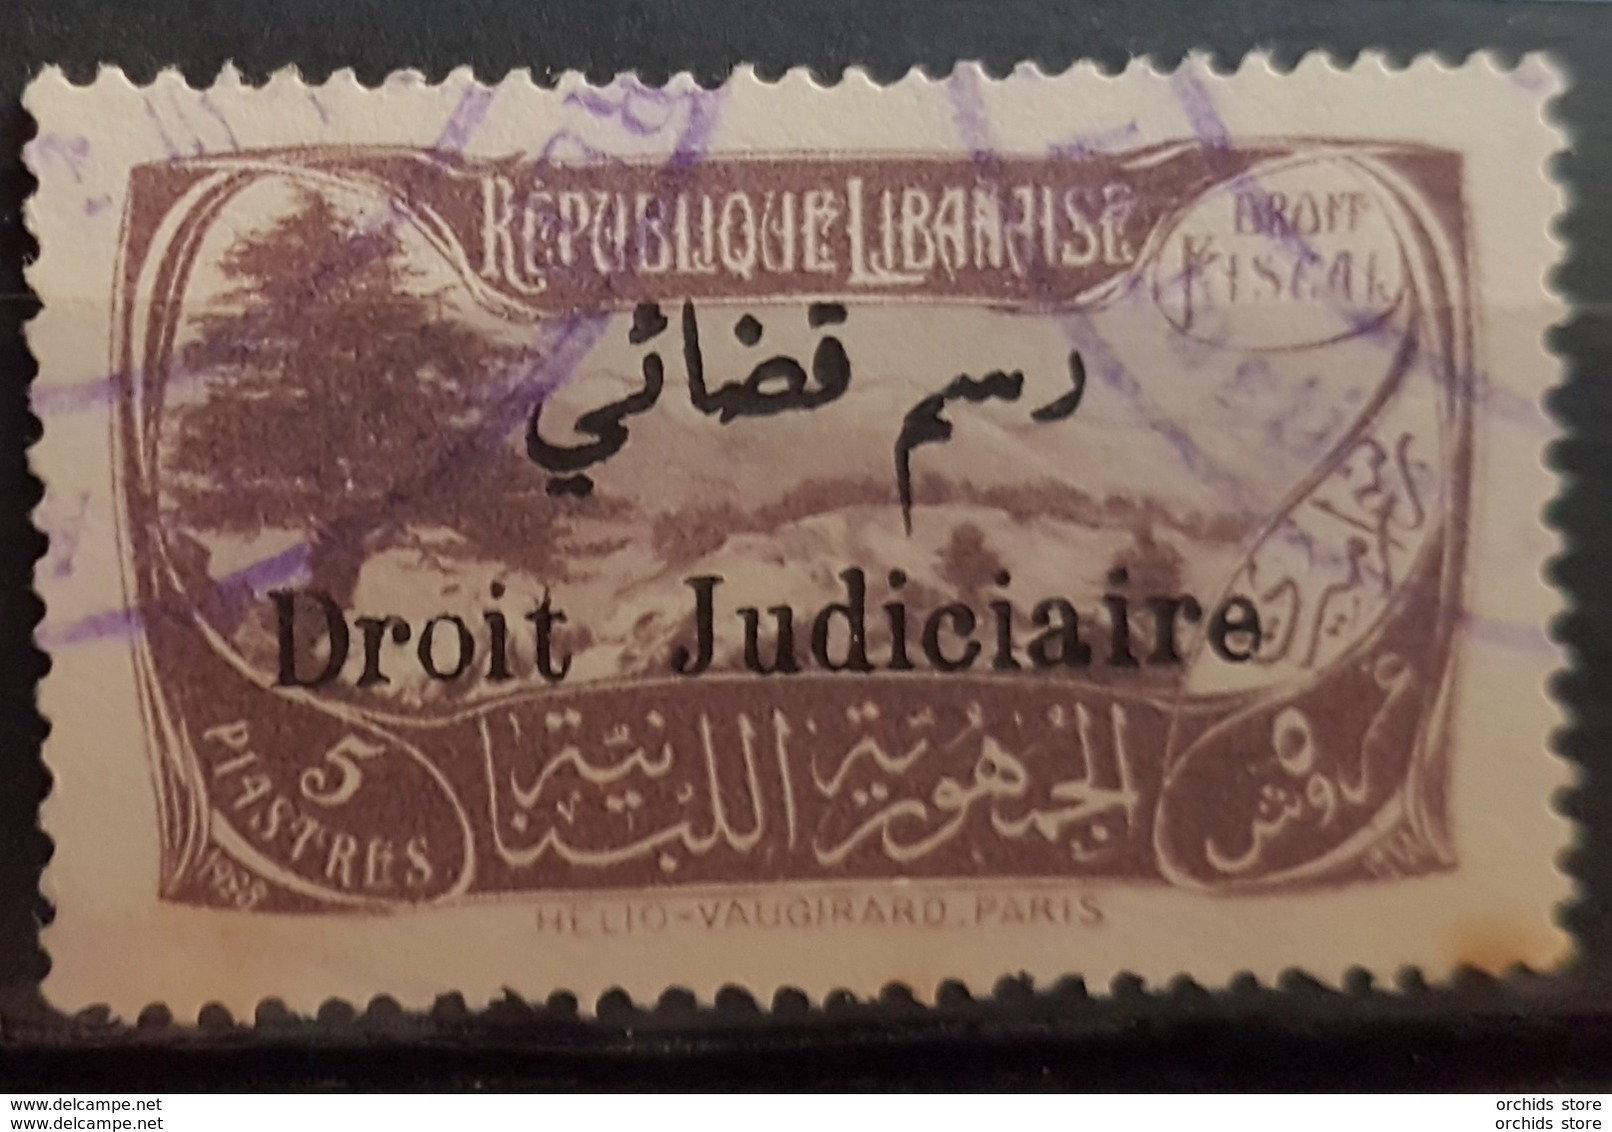 NO11 56 - Lebanon 1932 Cedar & Landscape Design Fiscal 5p Grey Lilac Ovptd Droit Judiciaire Revenue Stamp (Justice) - Lebanon